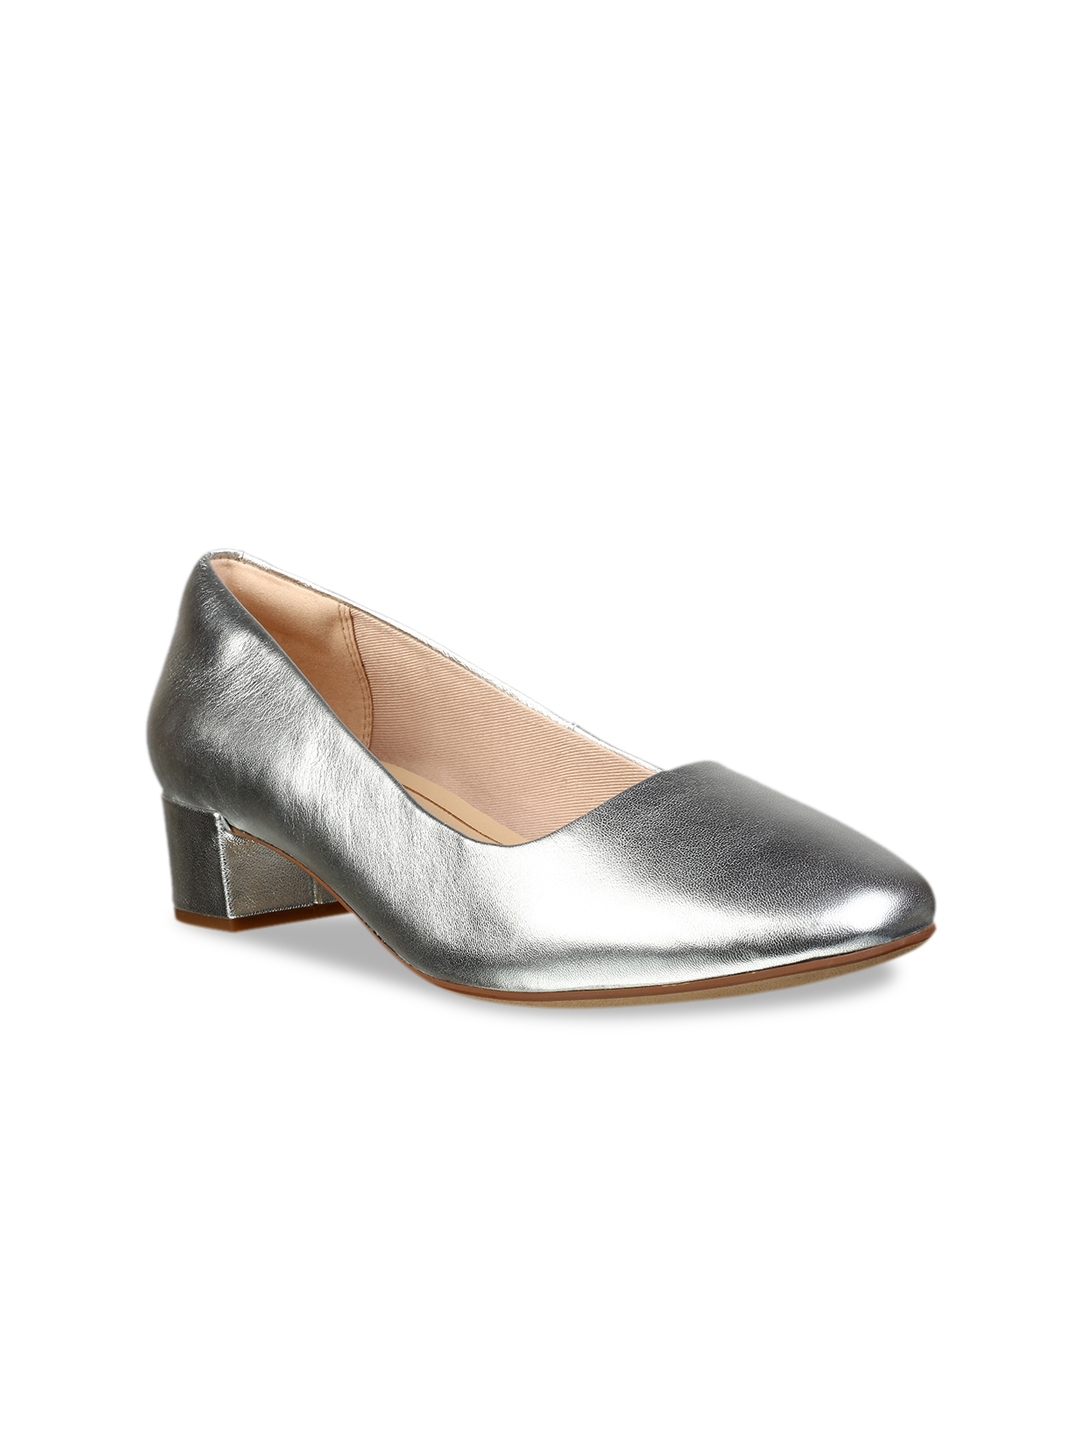 Buy Clarks Women Silver Toned Solid Pumps - Heels for Women 9863537 ...